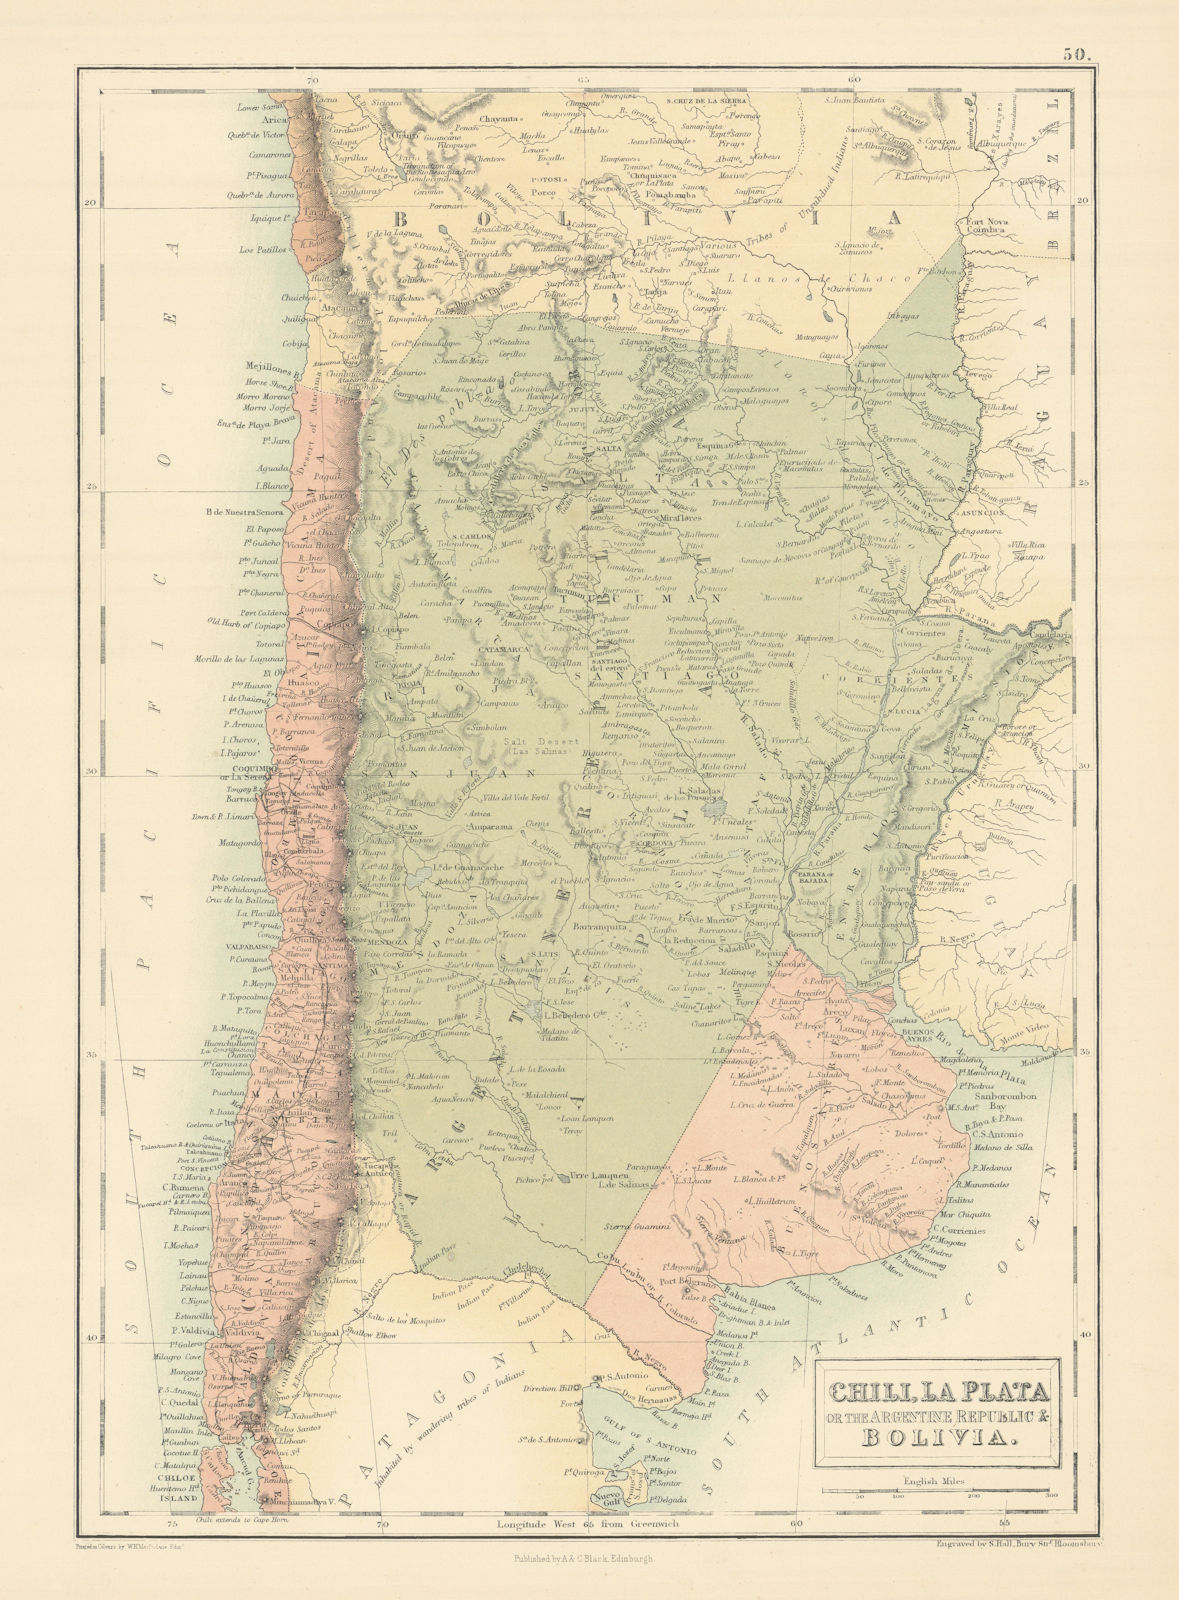 Chili Argentine Republic Bolivia w/ Litoral Chile Argentina BARTHOLOMEW 1862 map